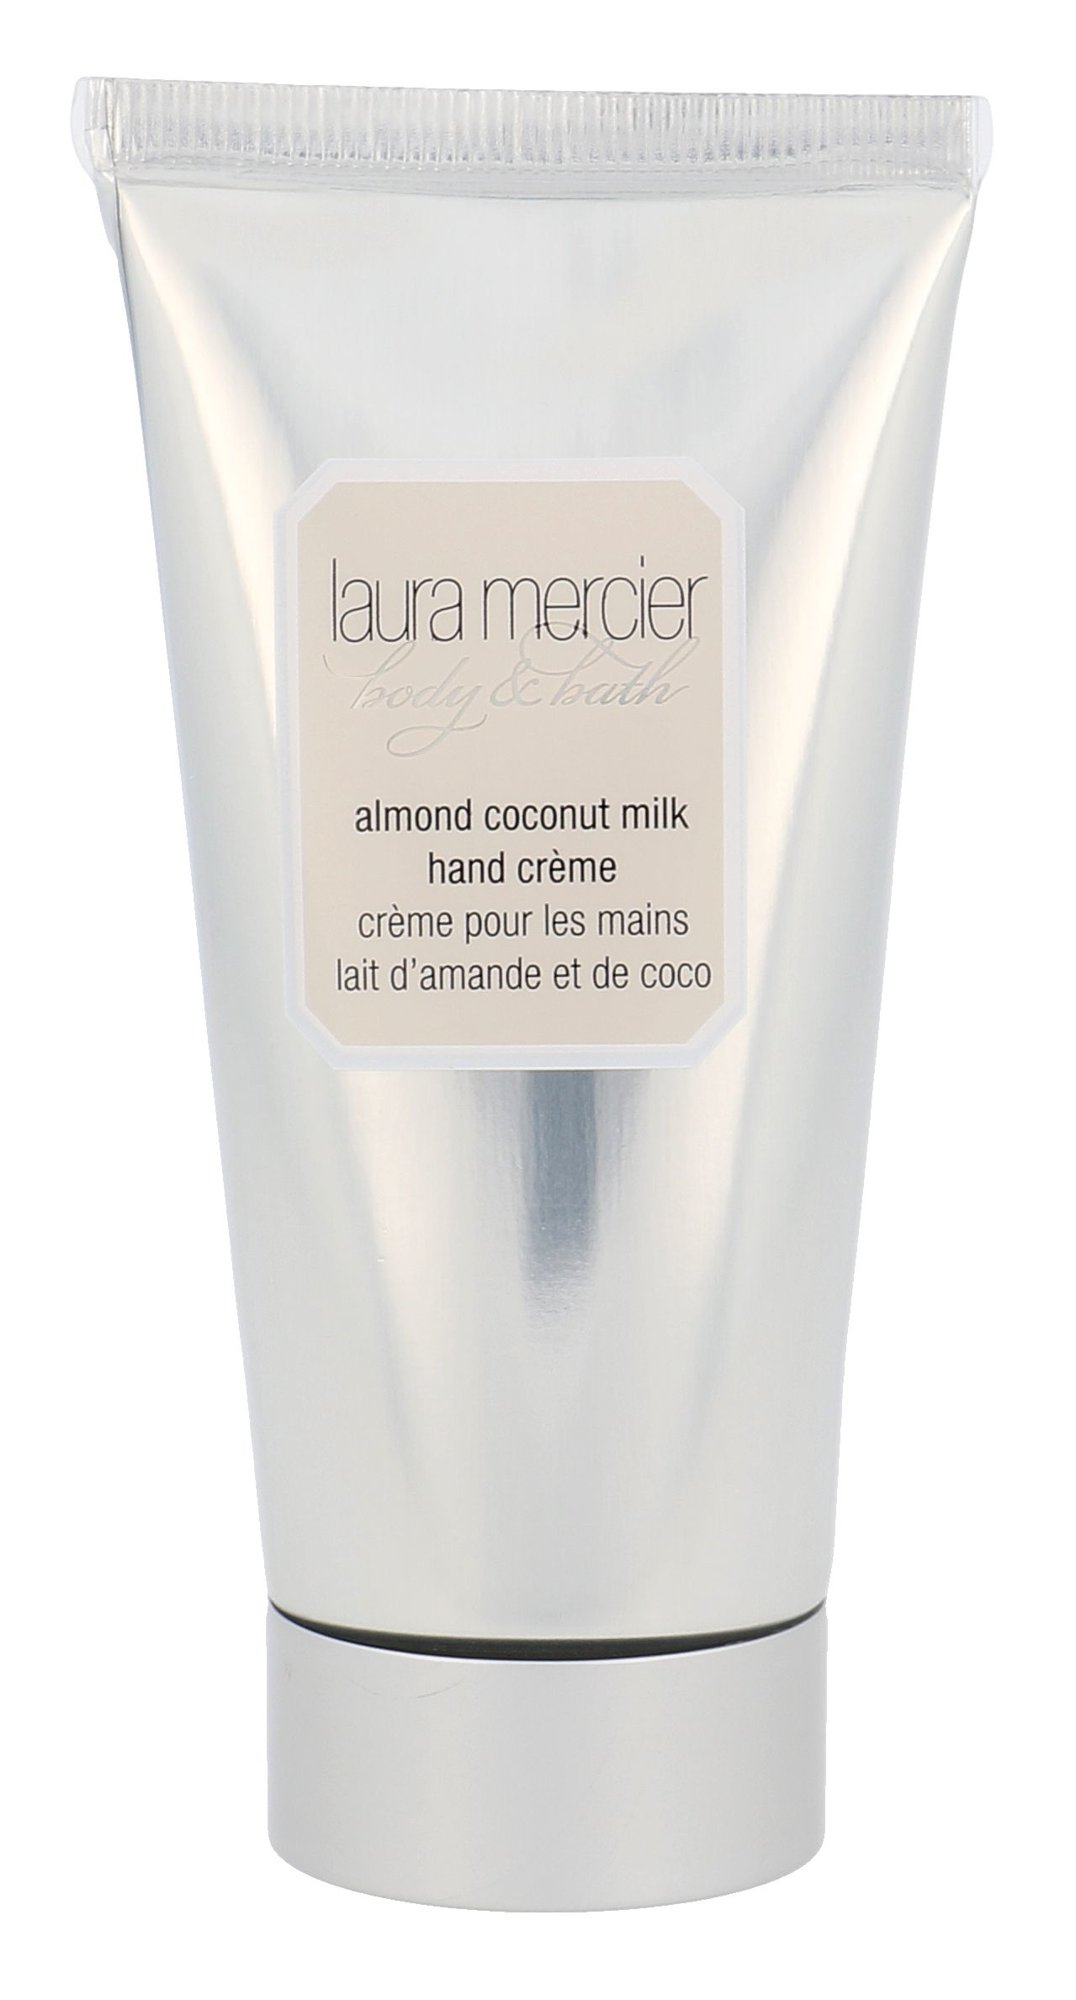 Laura Mercier Body & Bath Almond Coconut Milk Hand Creme